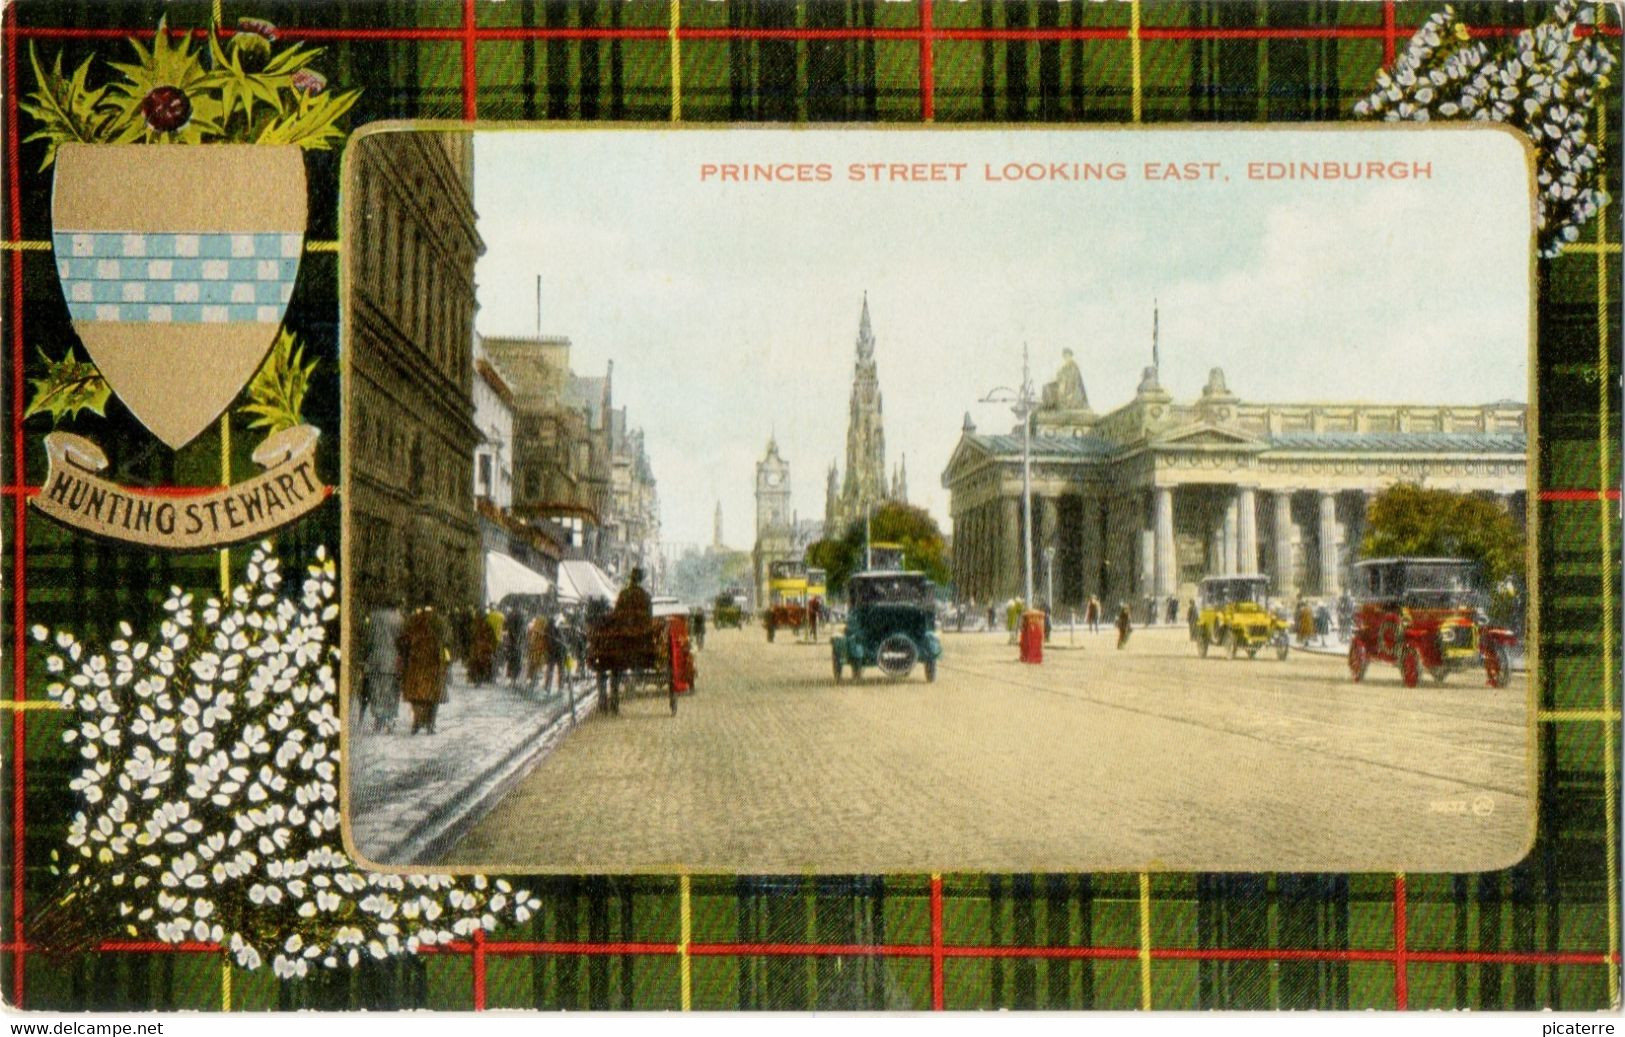 PRINCES STREET, EDINBURGH , Hunting Stewart Tartan, Clan -Crowded Street Scene- Cars, Buses,  Valentines Colourtone - Genealogy